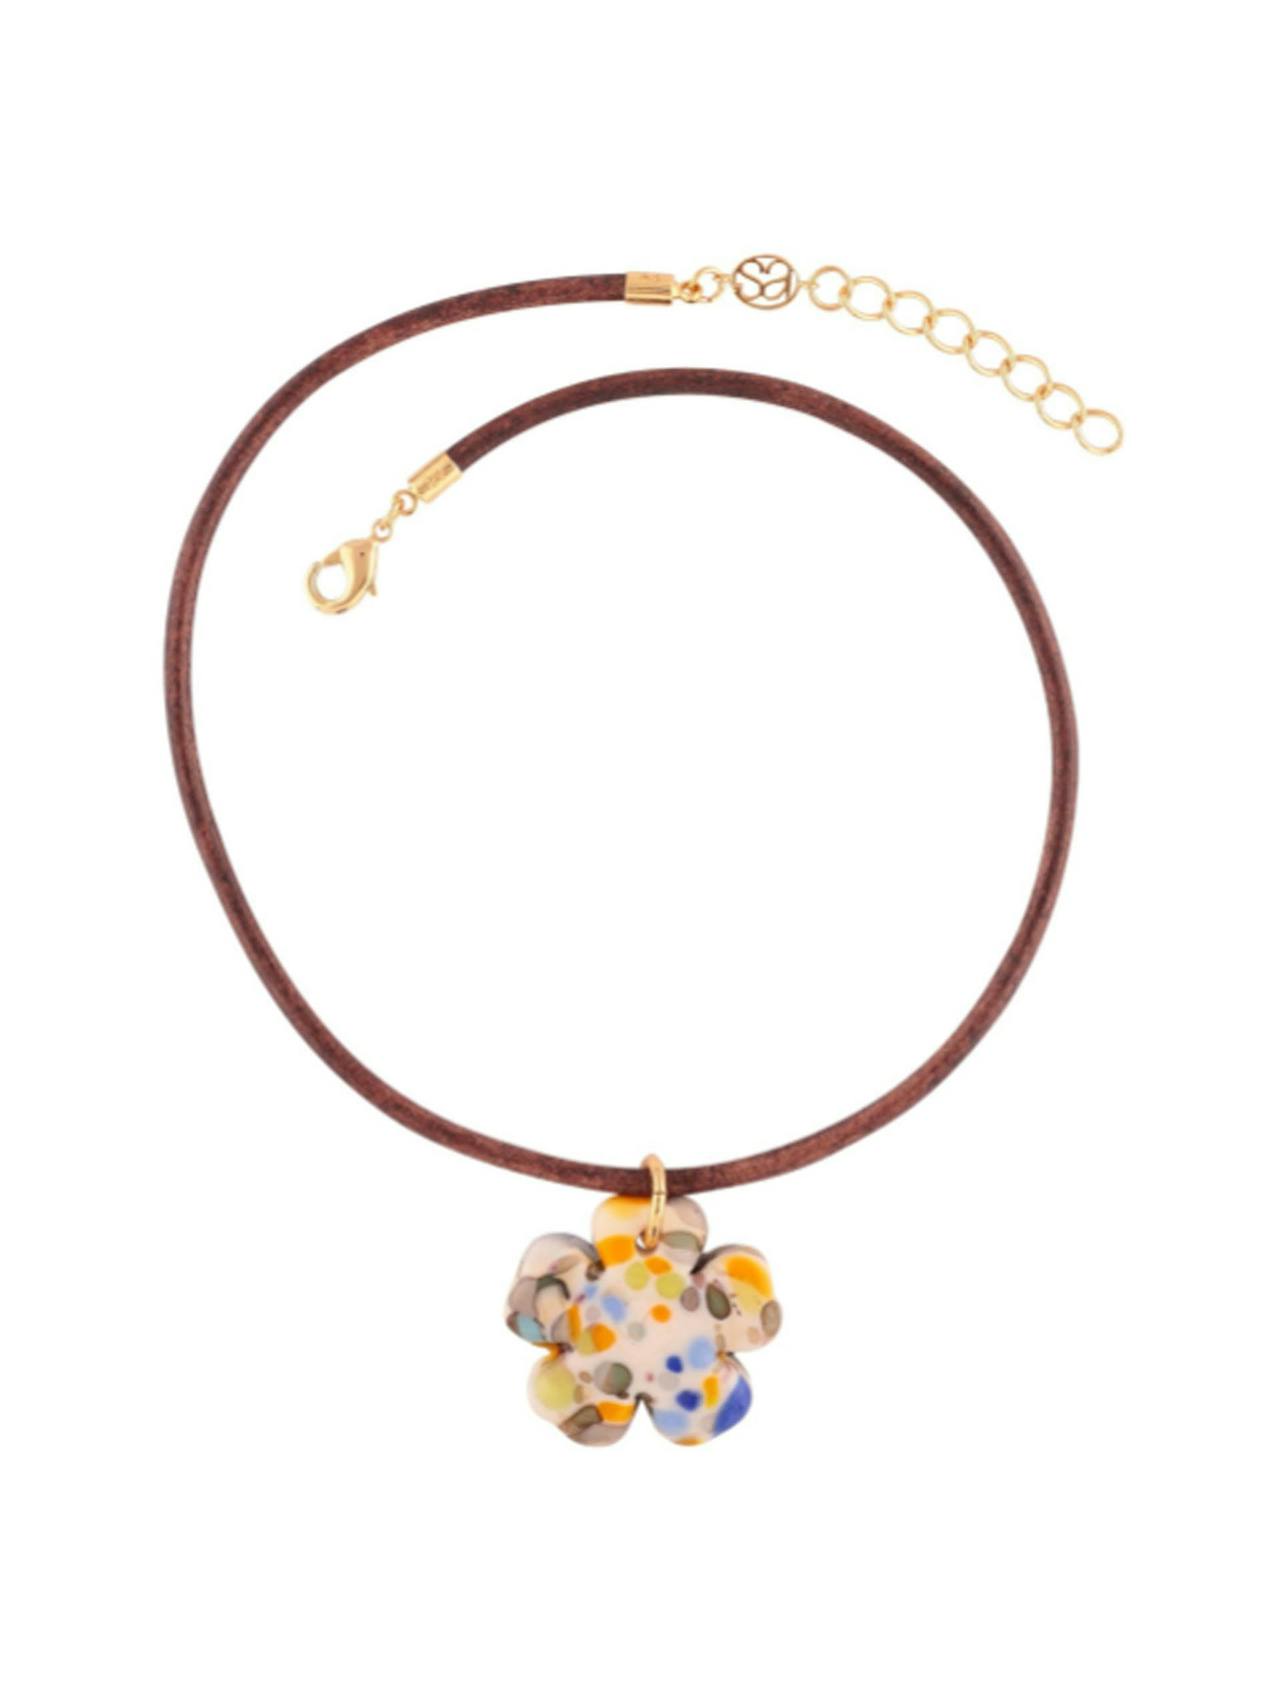 Multicolour clover leather cord necklace